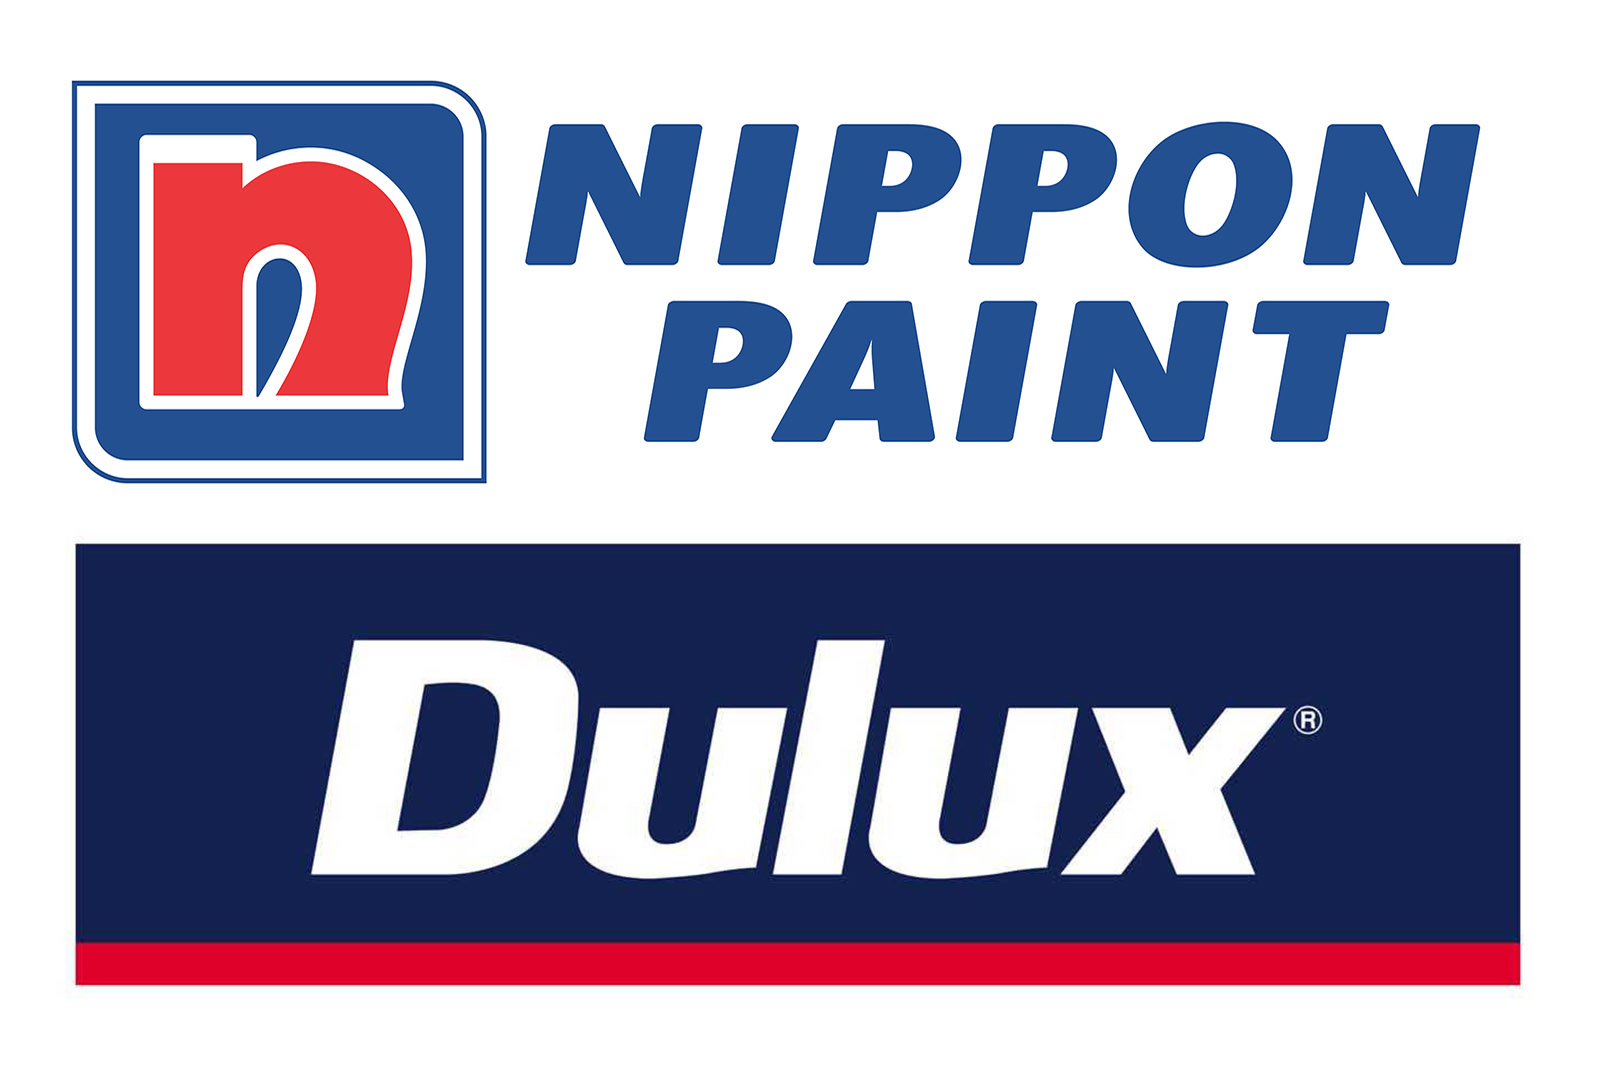  Nippon  Paint  To Buy Australia s DuluxGroup BodyShop News